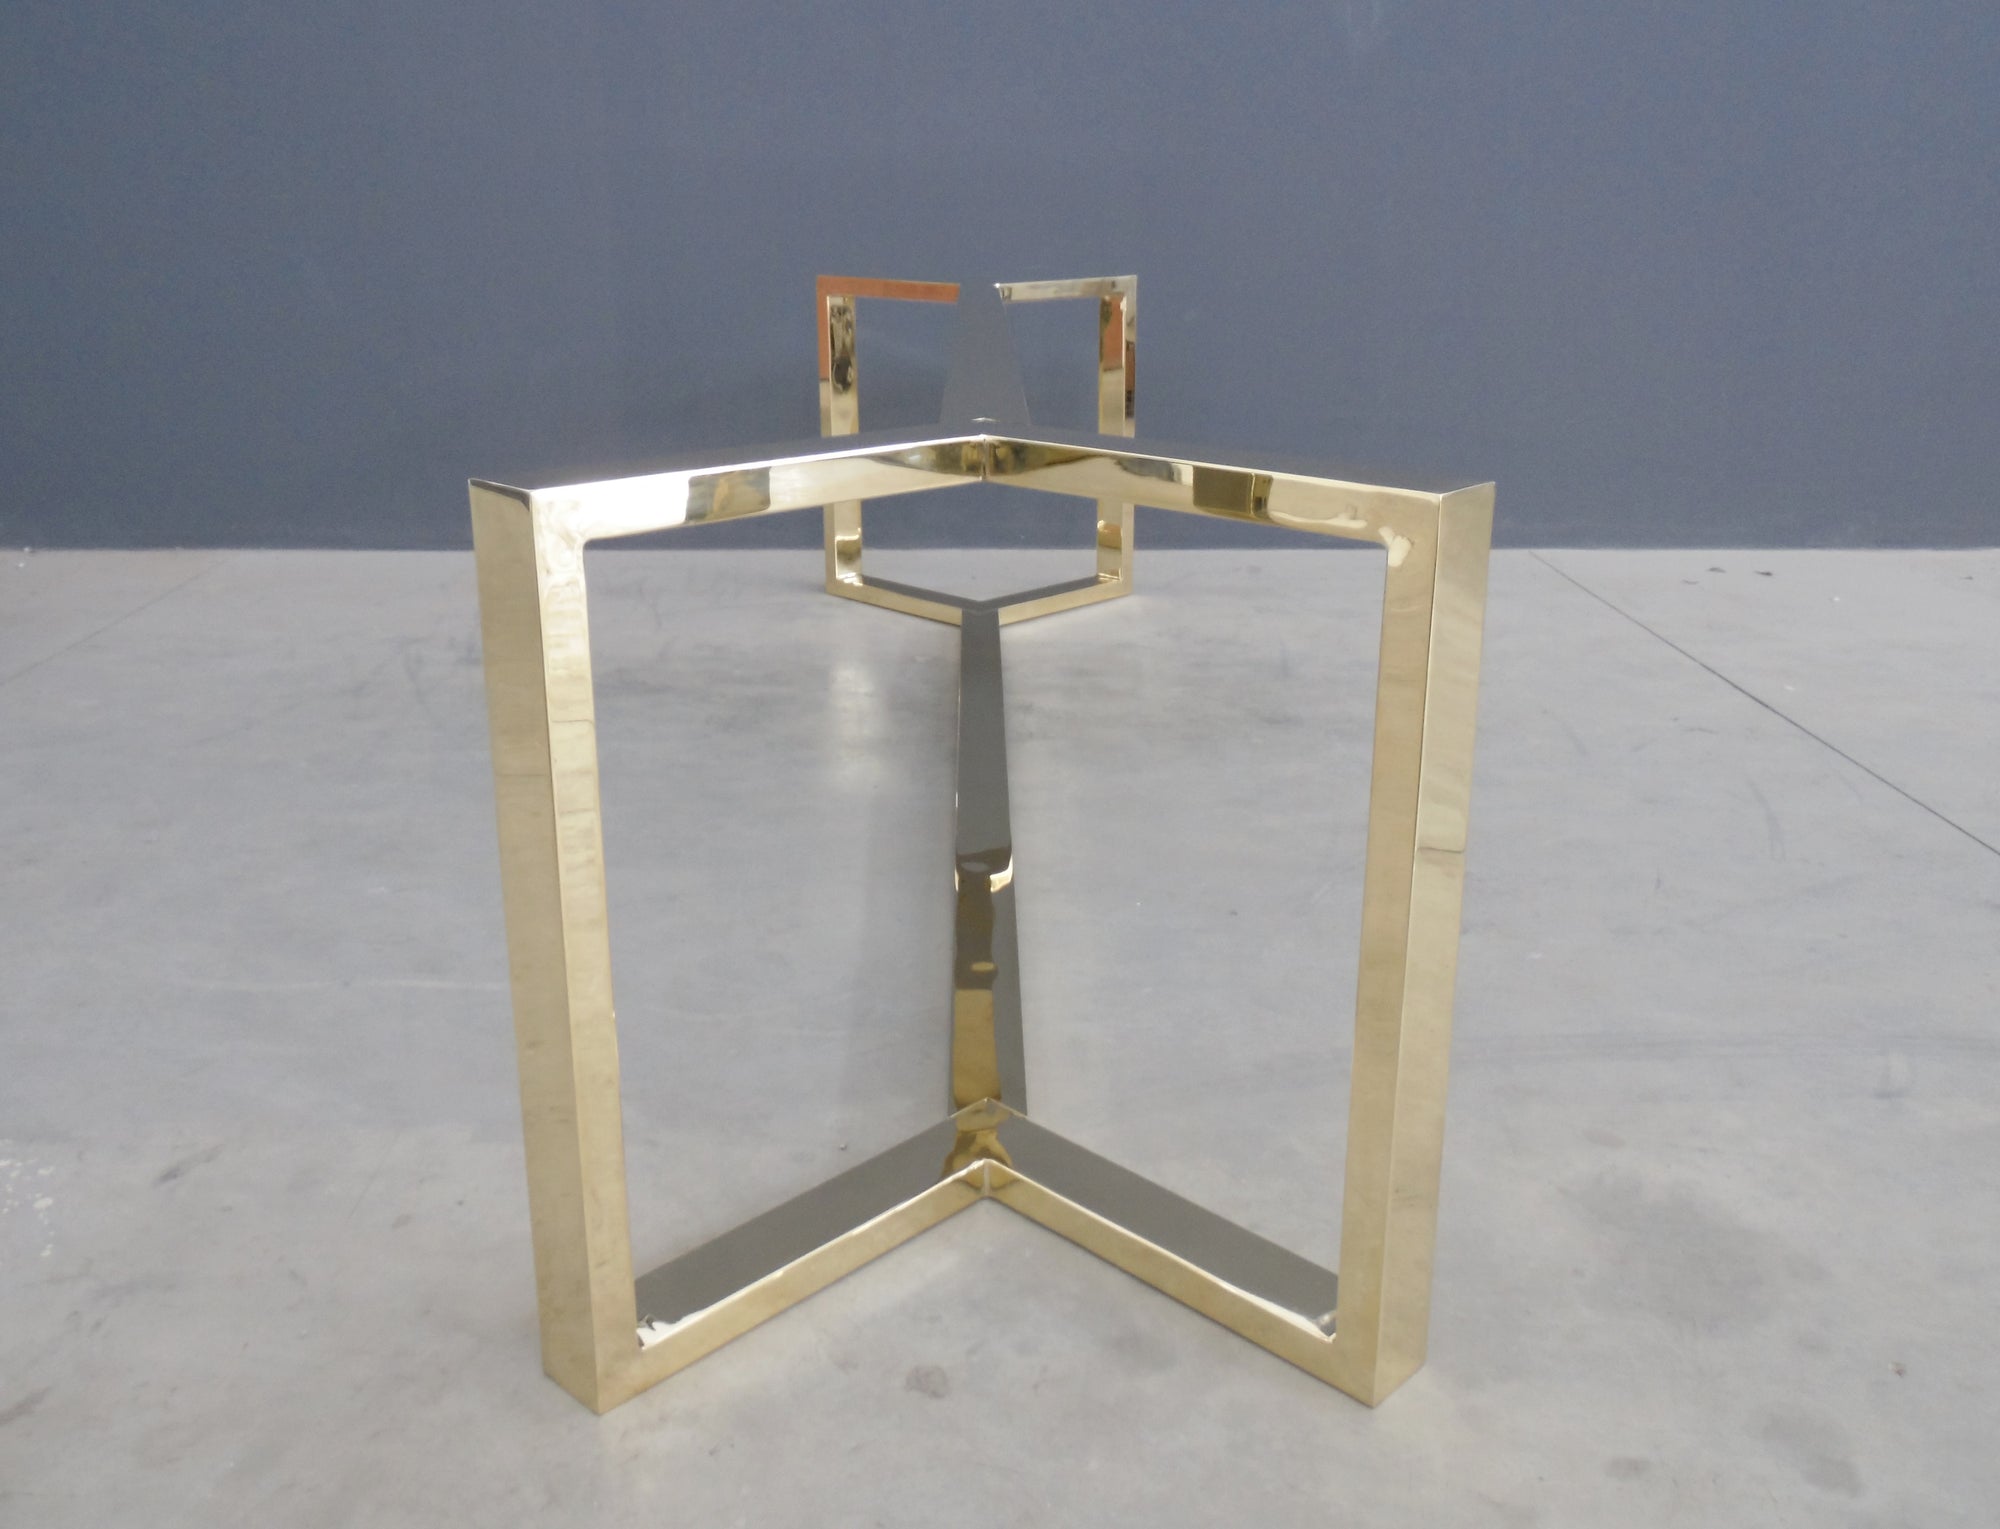 TUNA Brass Table Base, 28" H x 28” W x 72” L